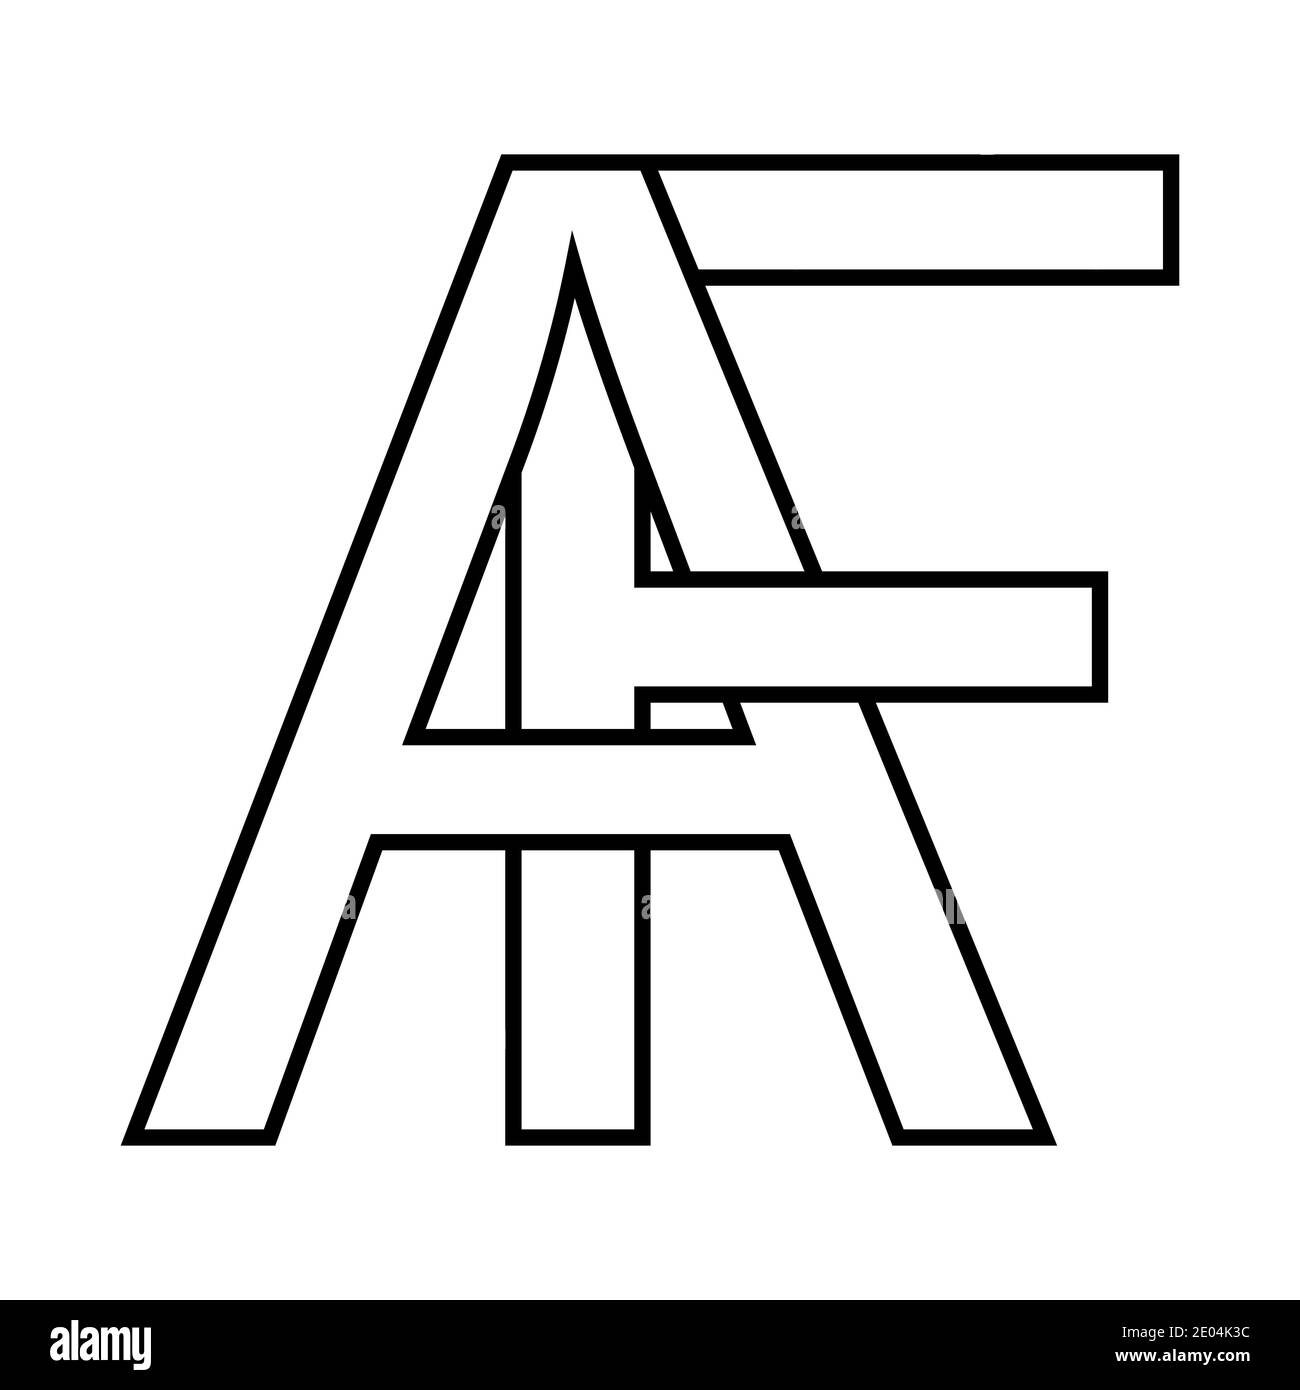 Logo af Symbol Zeichen Zeilensprungbuchstaben A, F Vektor Logo af erste Großbuchstaben Muster Alphabet a, f Stock Vektor